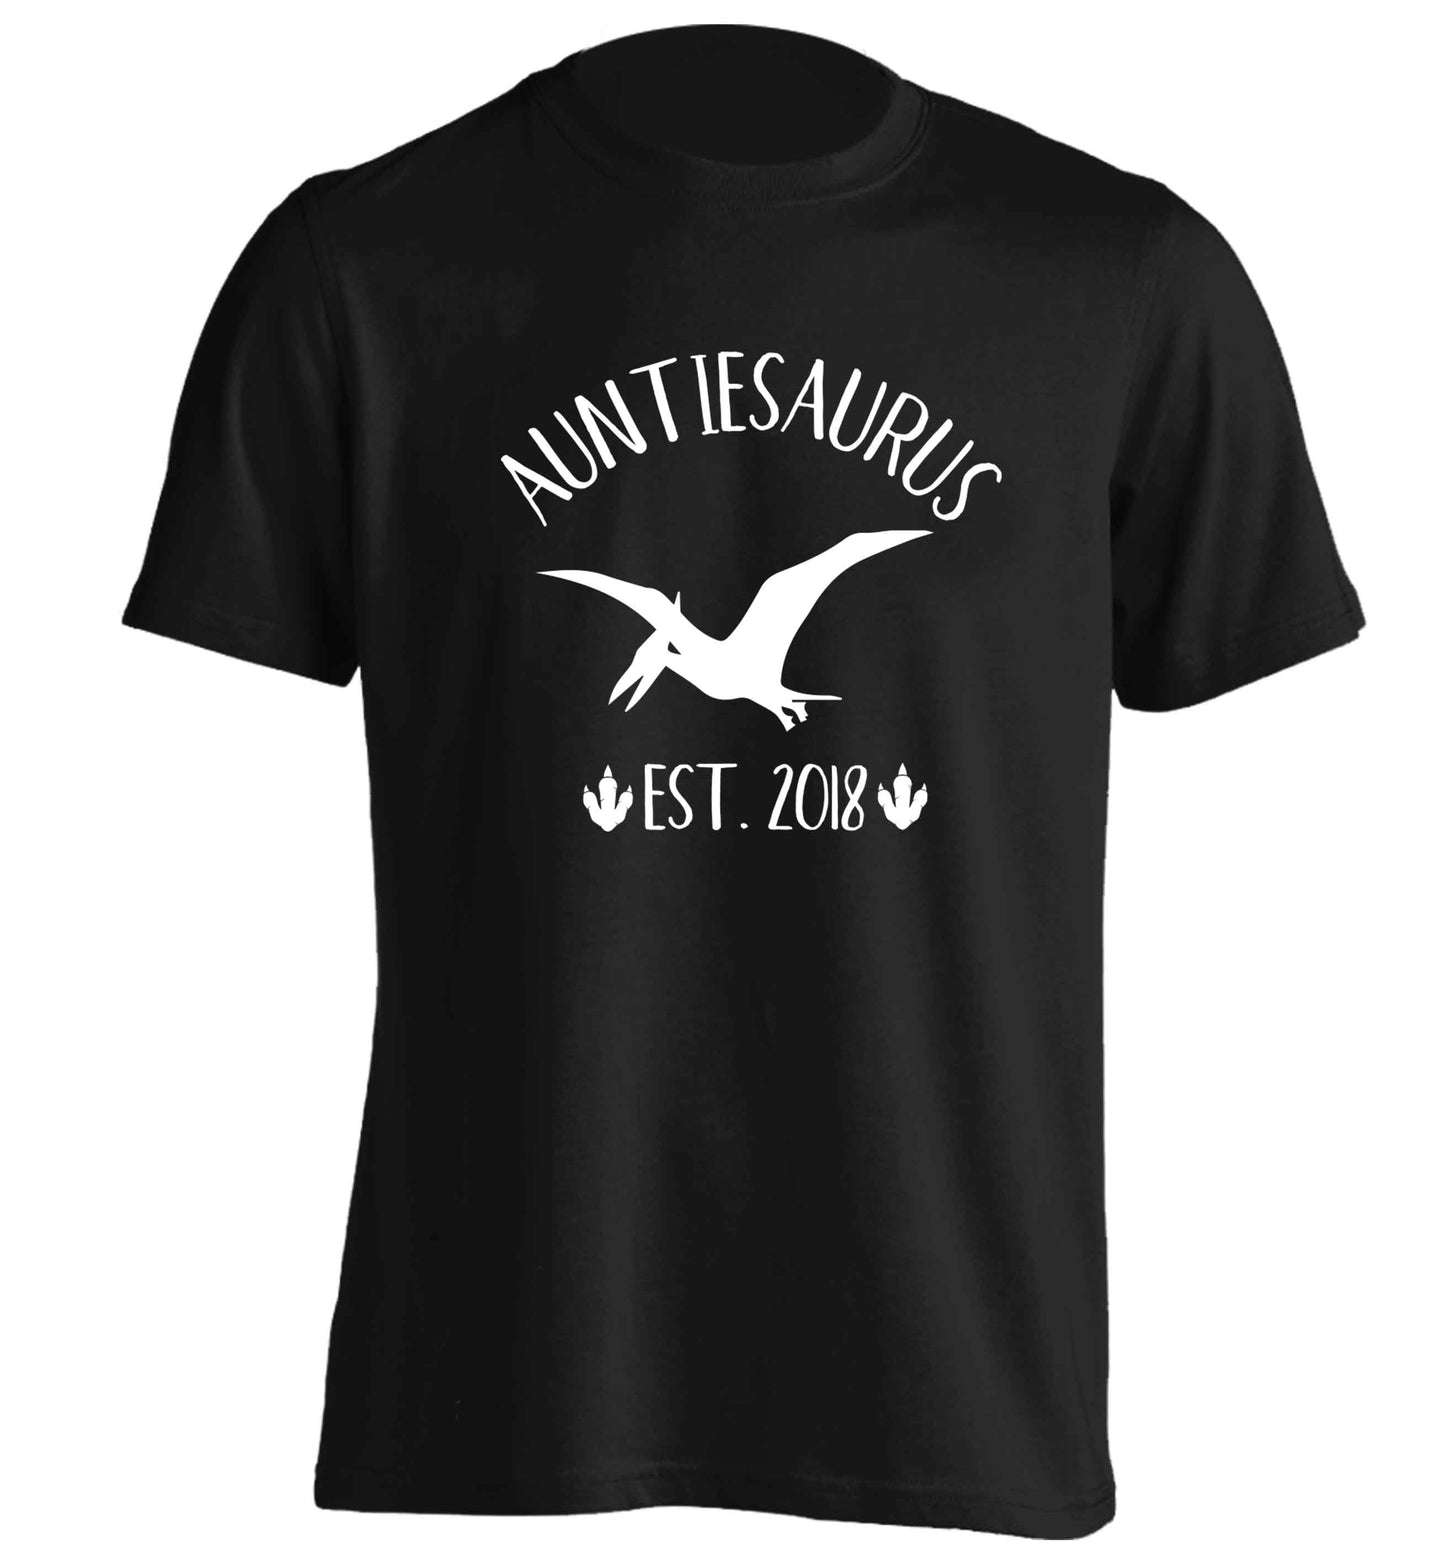 Personalised auntiesaurus since (custom date) adults unisex black Tshirt 2XL